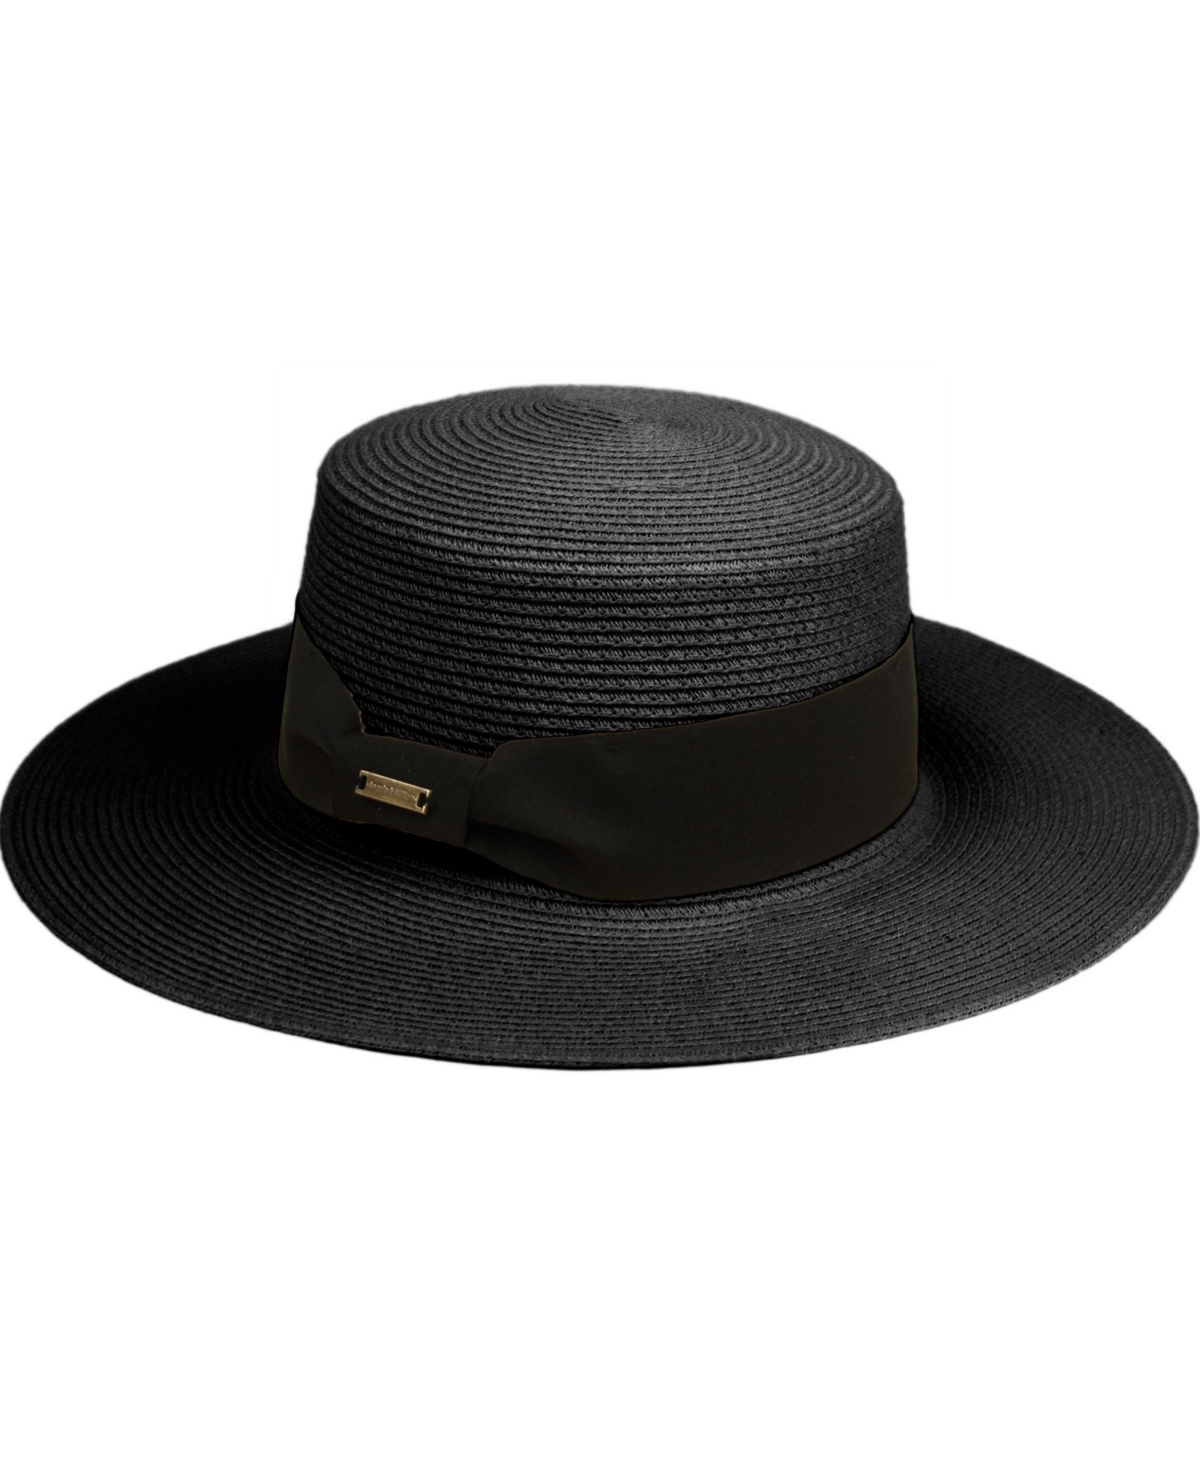 Angela & William Unisex Flat Brim Boater Straw Sun Hat In Black